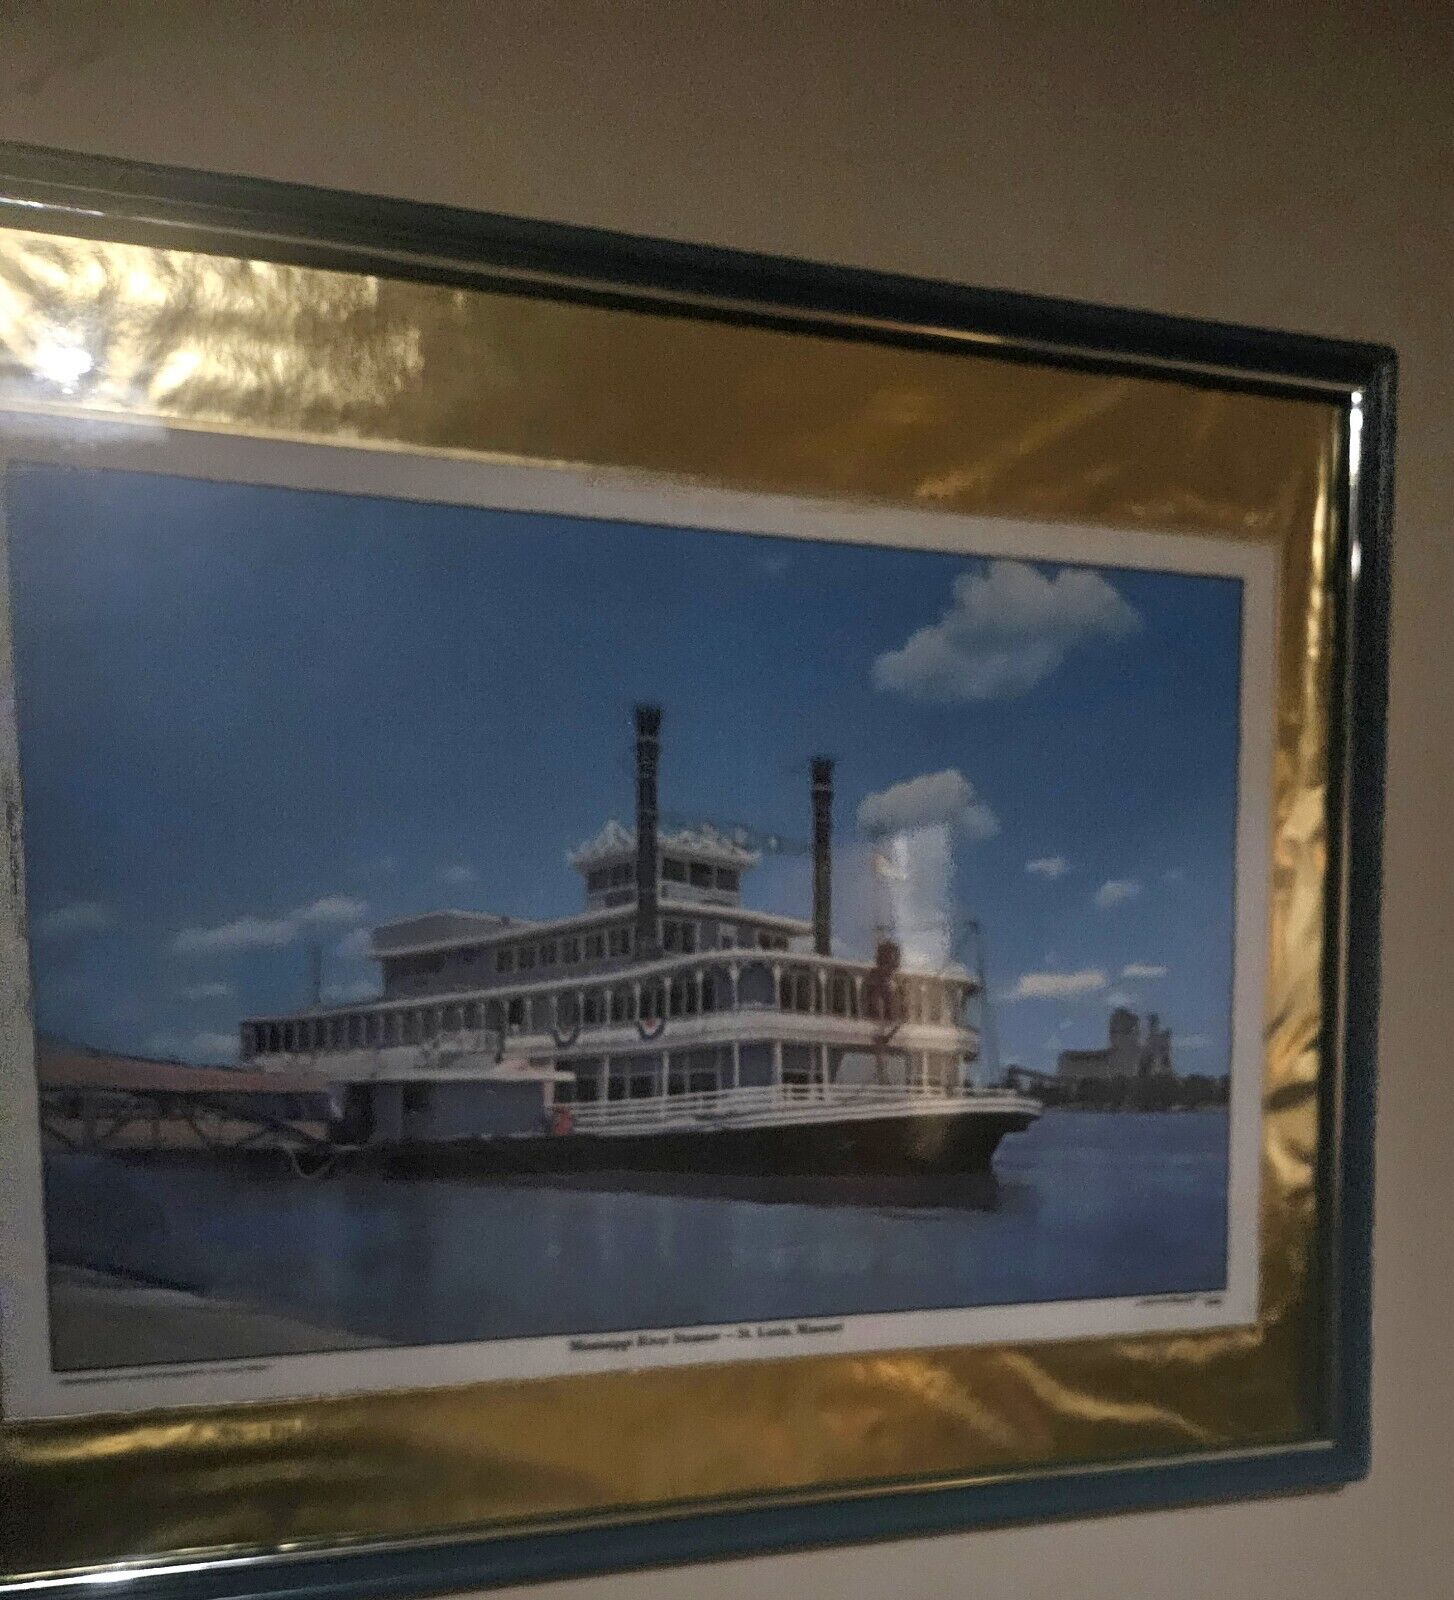 Postcard The Lt Robert E Lee Riverboat, St Louis, Missouri